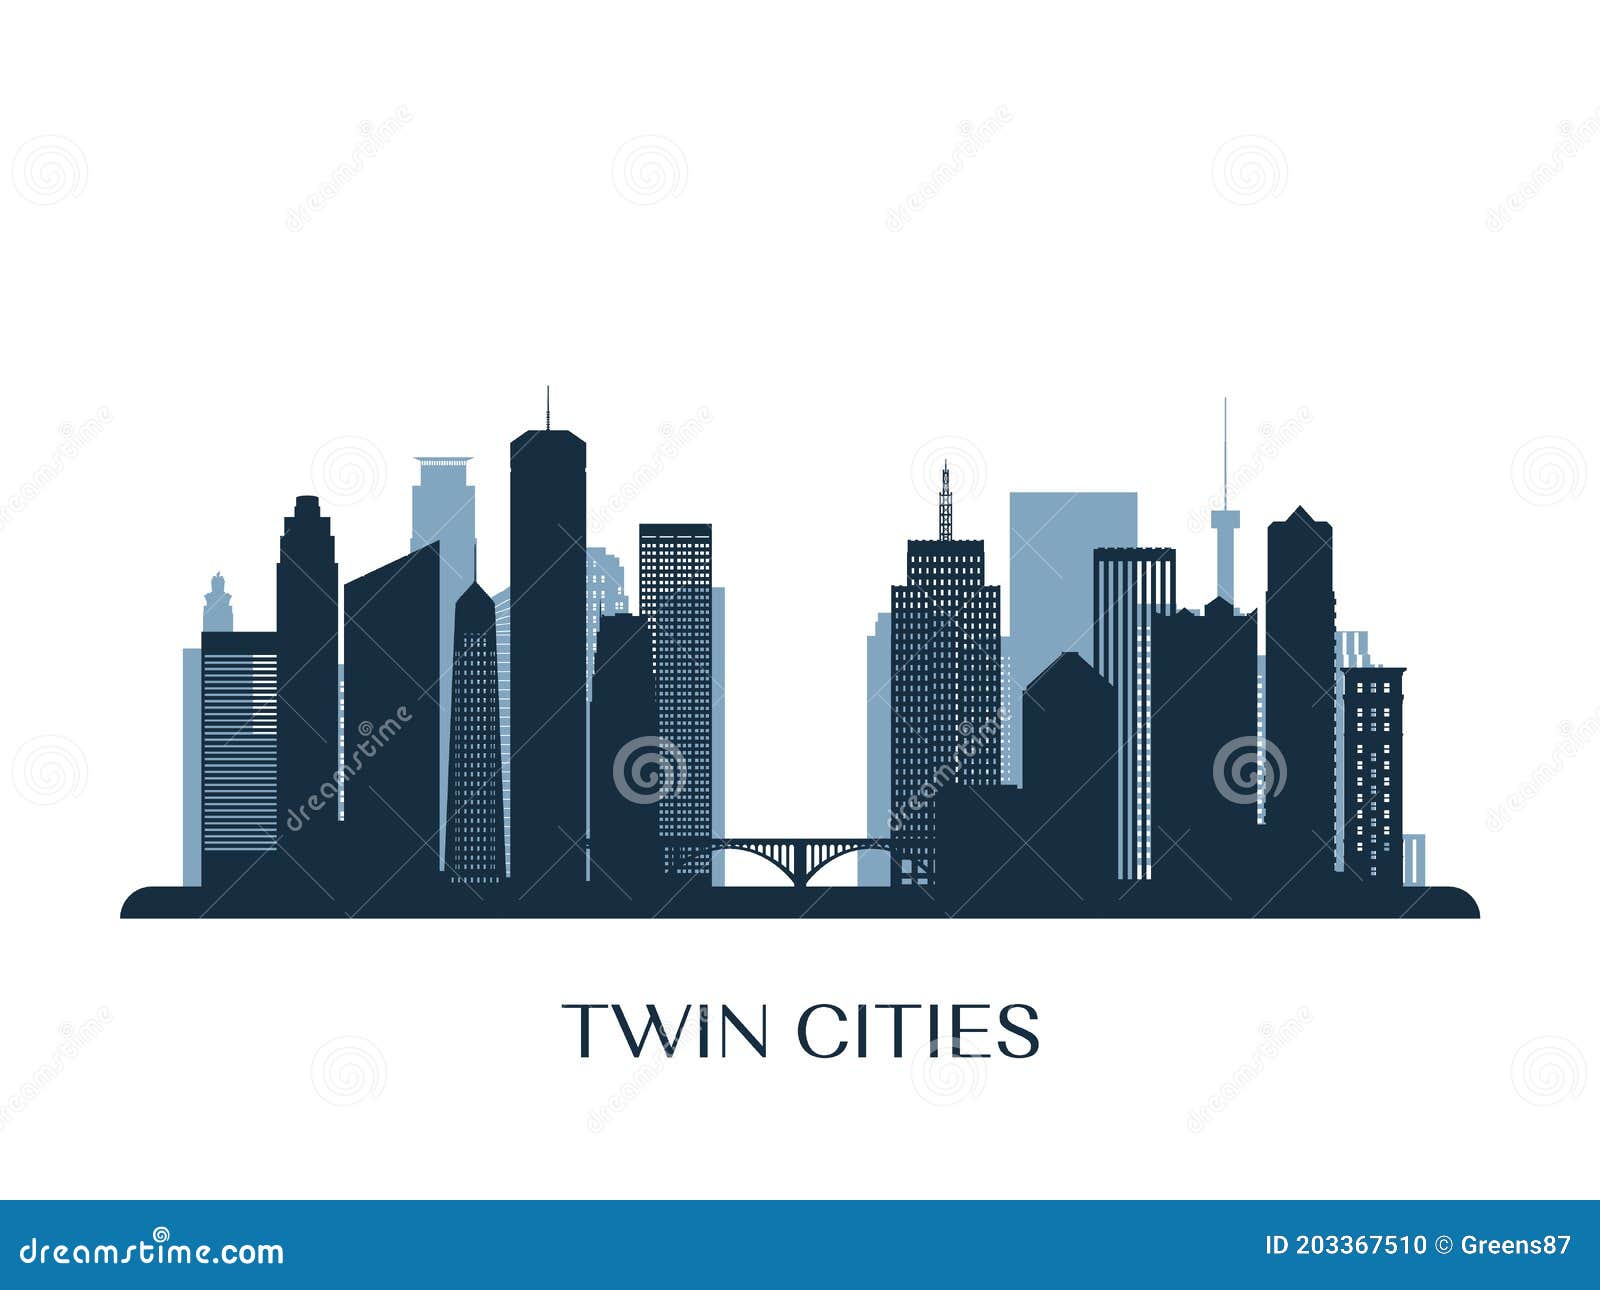 twin cities skyline, monochrome silhouette.